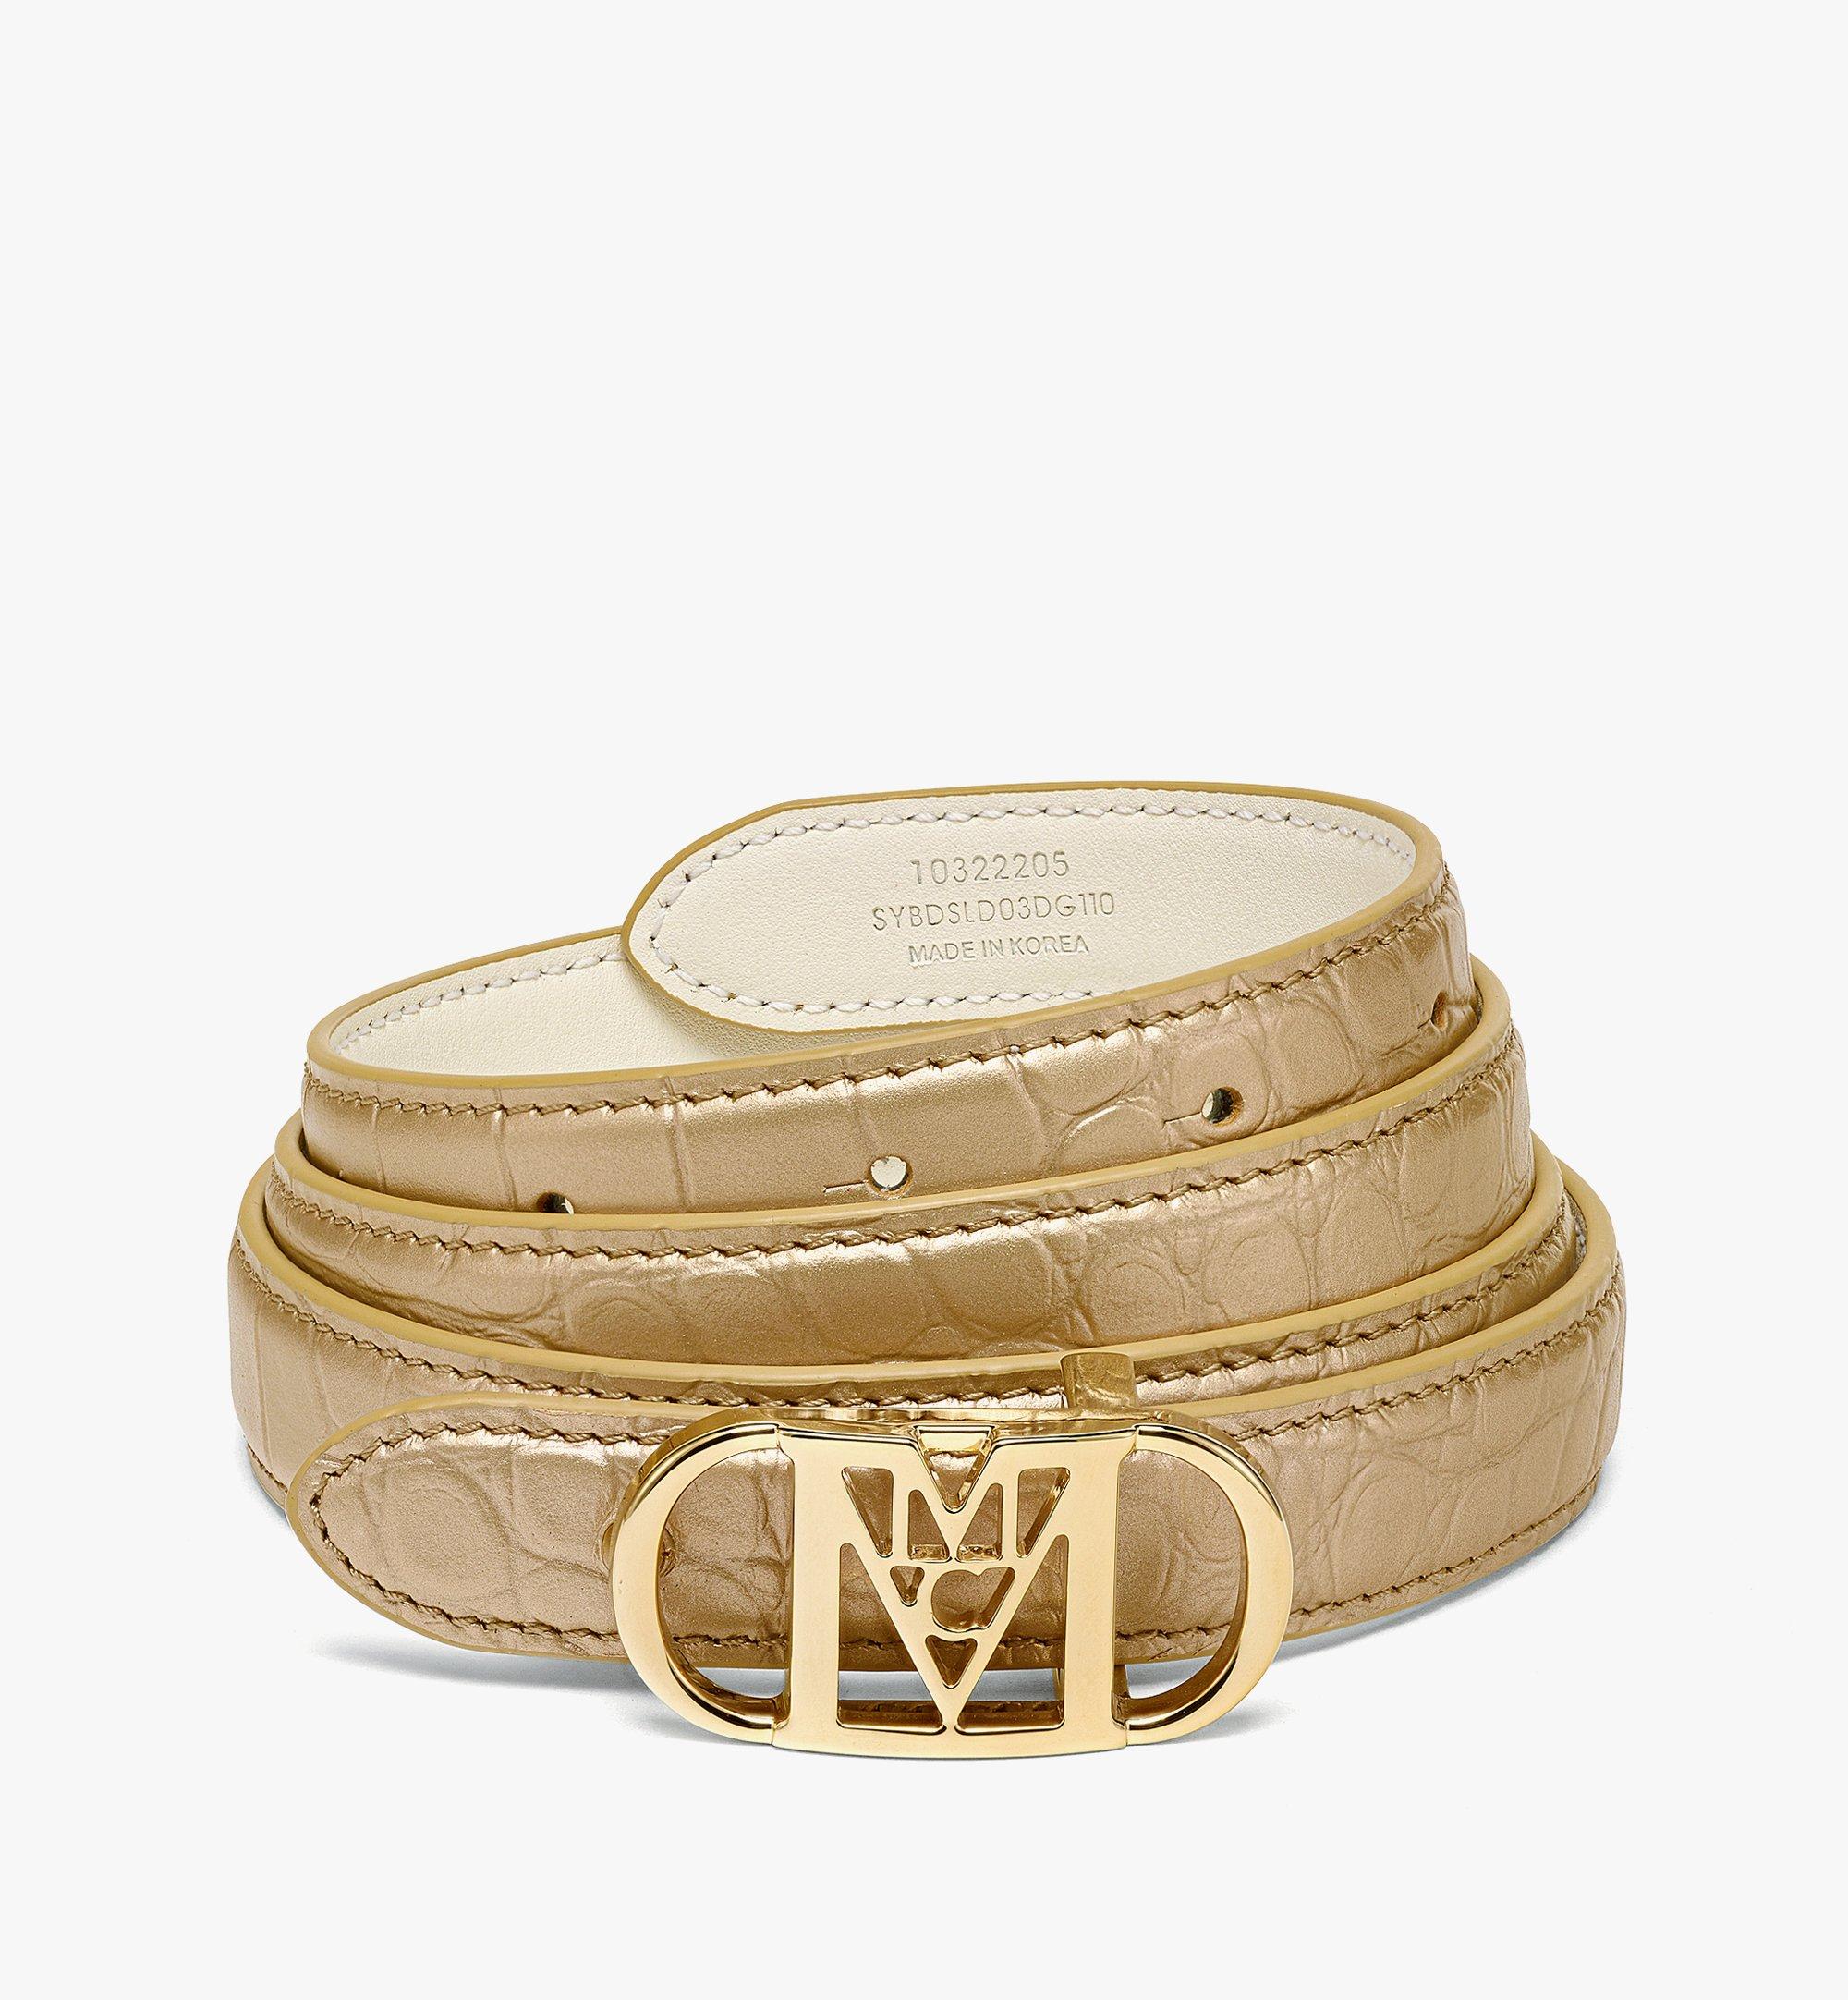 MCM Mode Travia Reversible Belt in Metallic Croco Leather Gold MYBDSLD03DG110 Alternate View 1